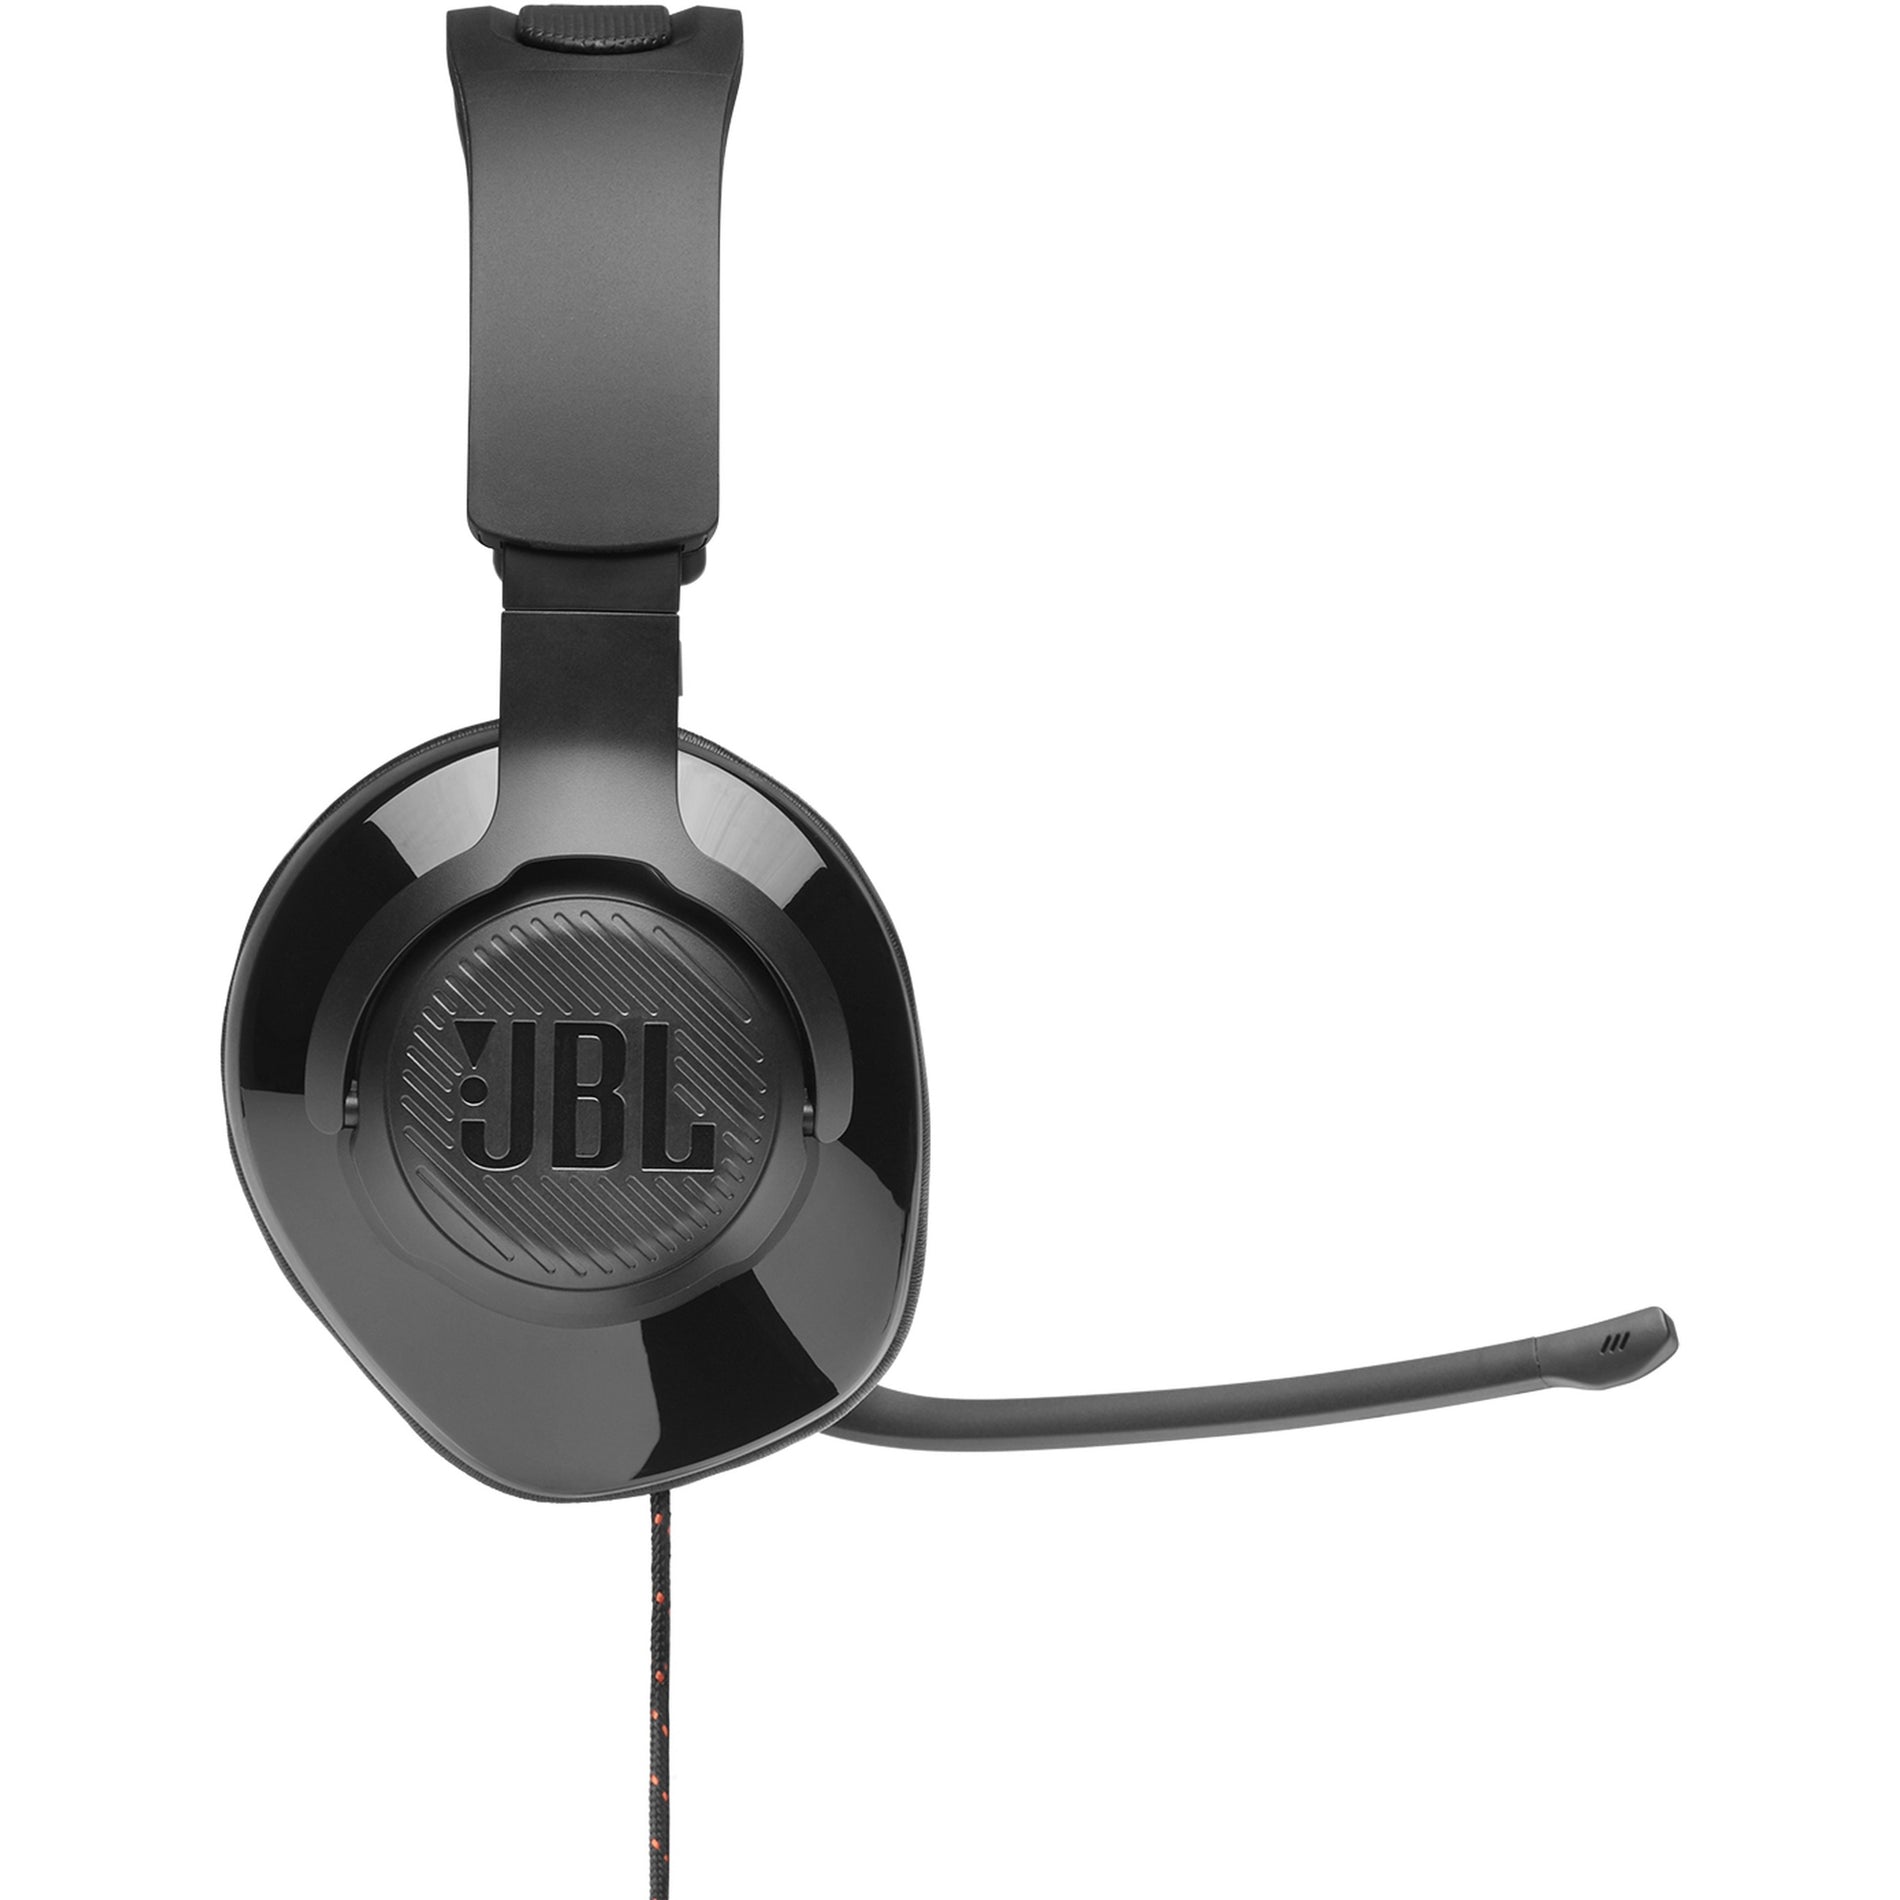 JBL JBL-QUANTUM200P Quantum 200 Gaming Headset, Binaural Over-the-ear Stereo Headphones with Echo Cancelling Microphone